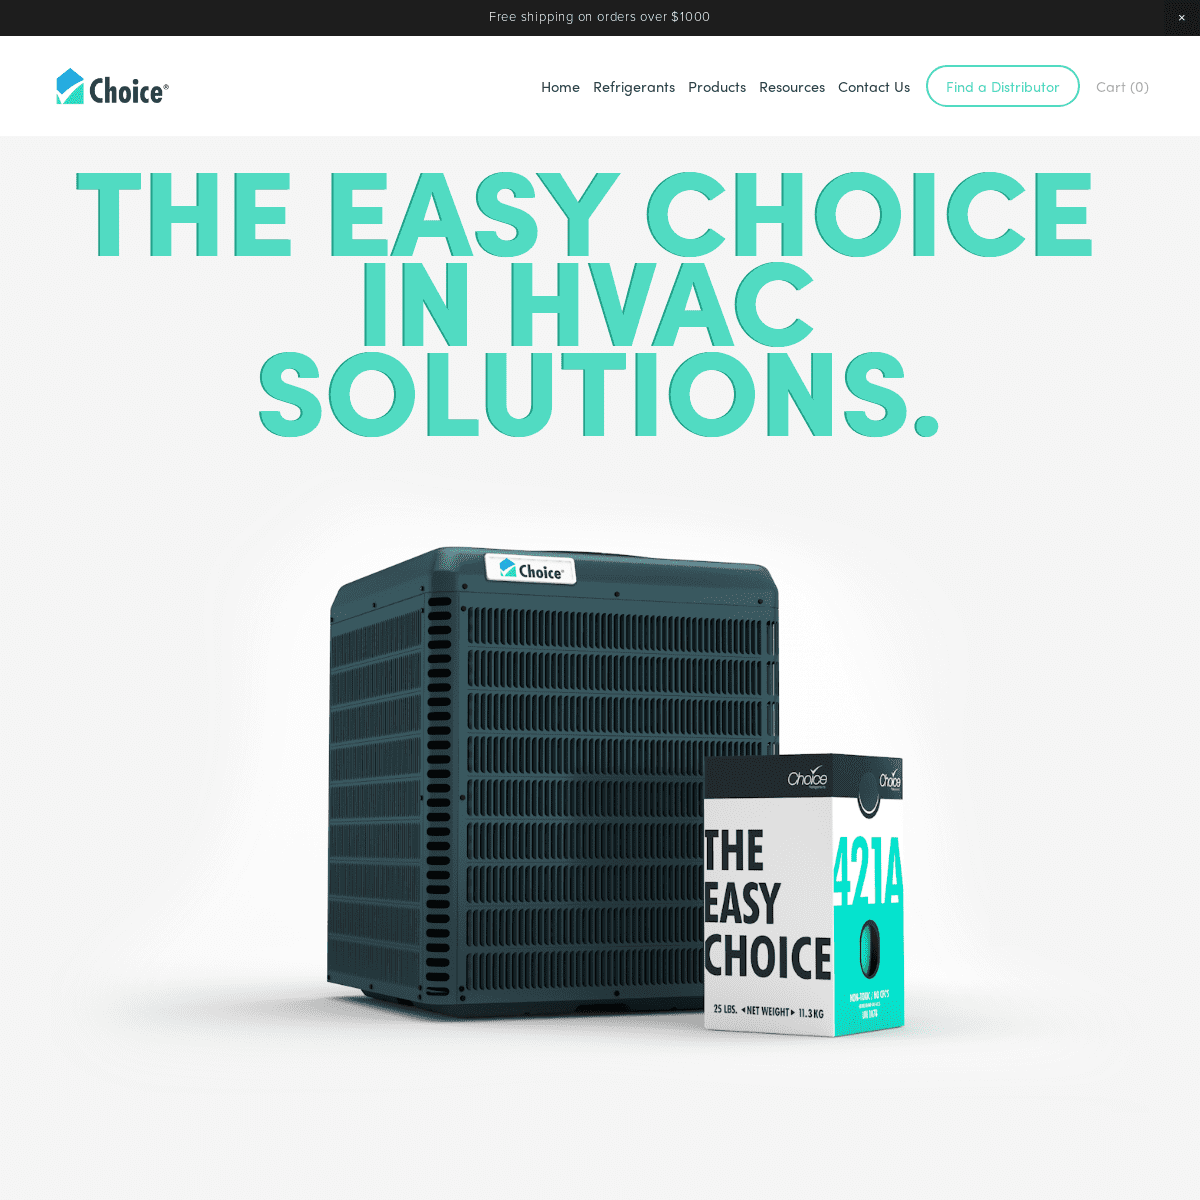 A complete backup of choicerefrigerants.com